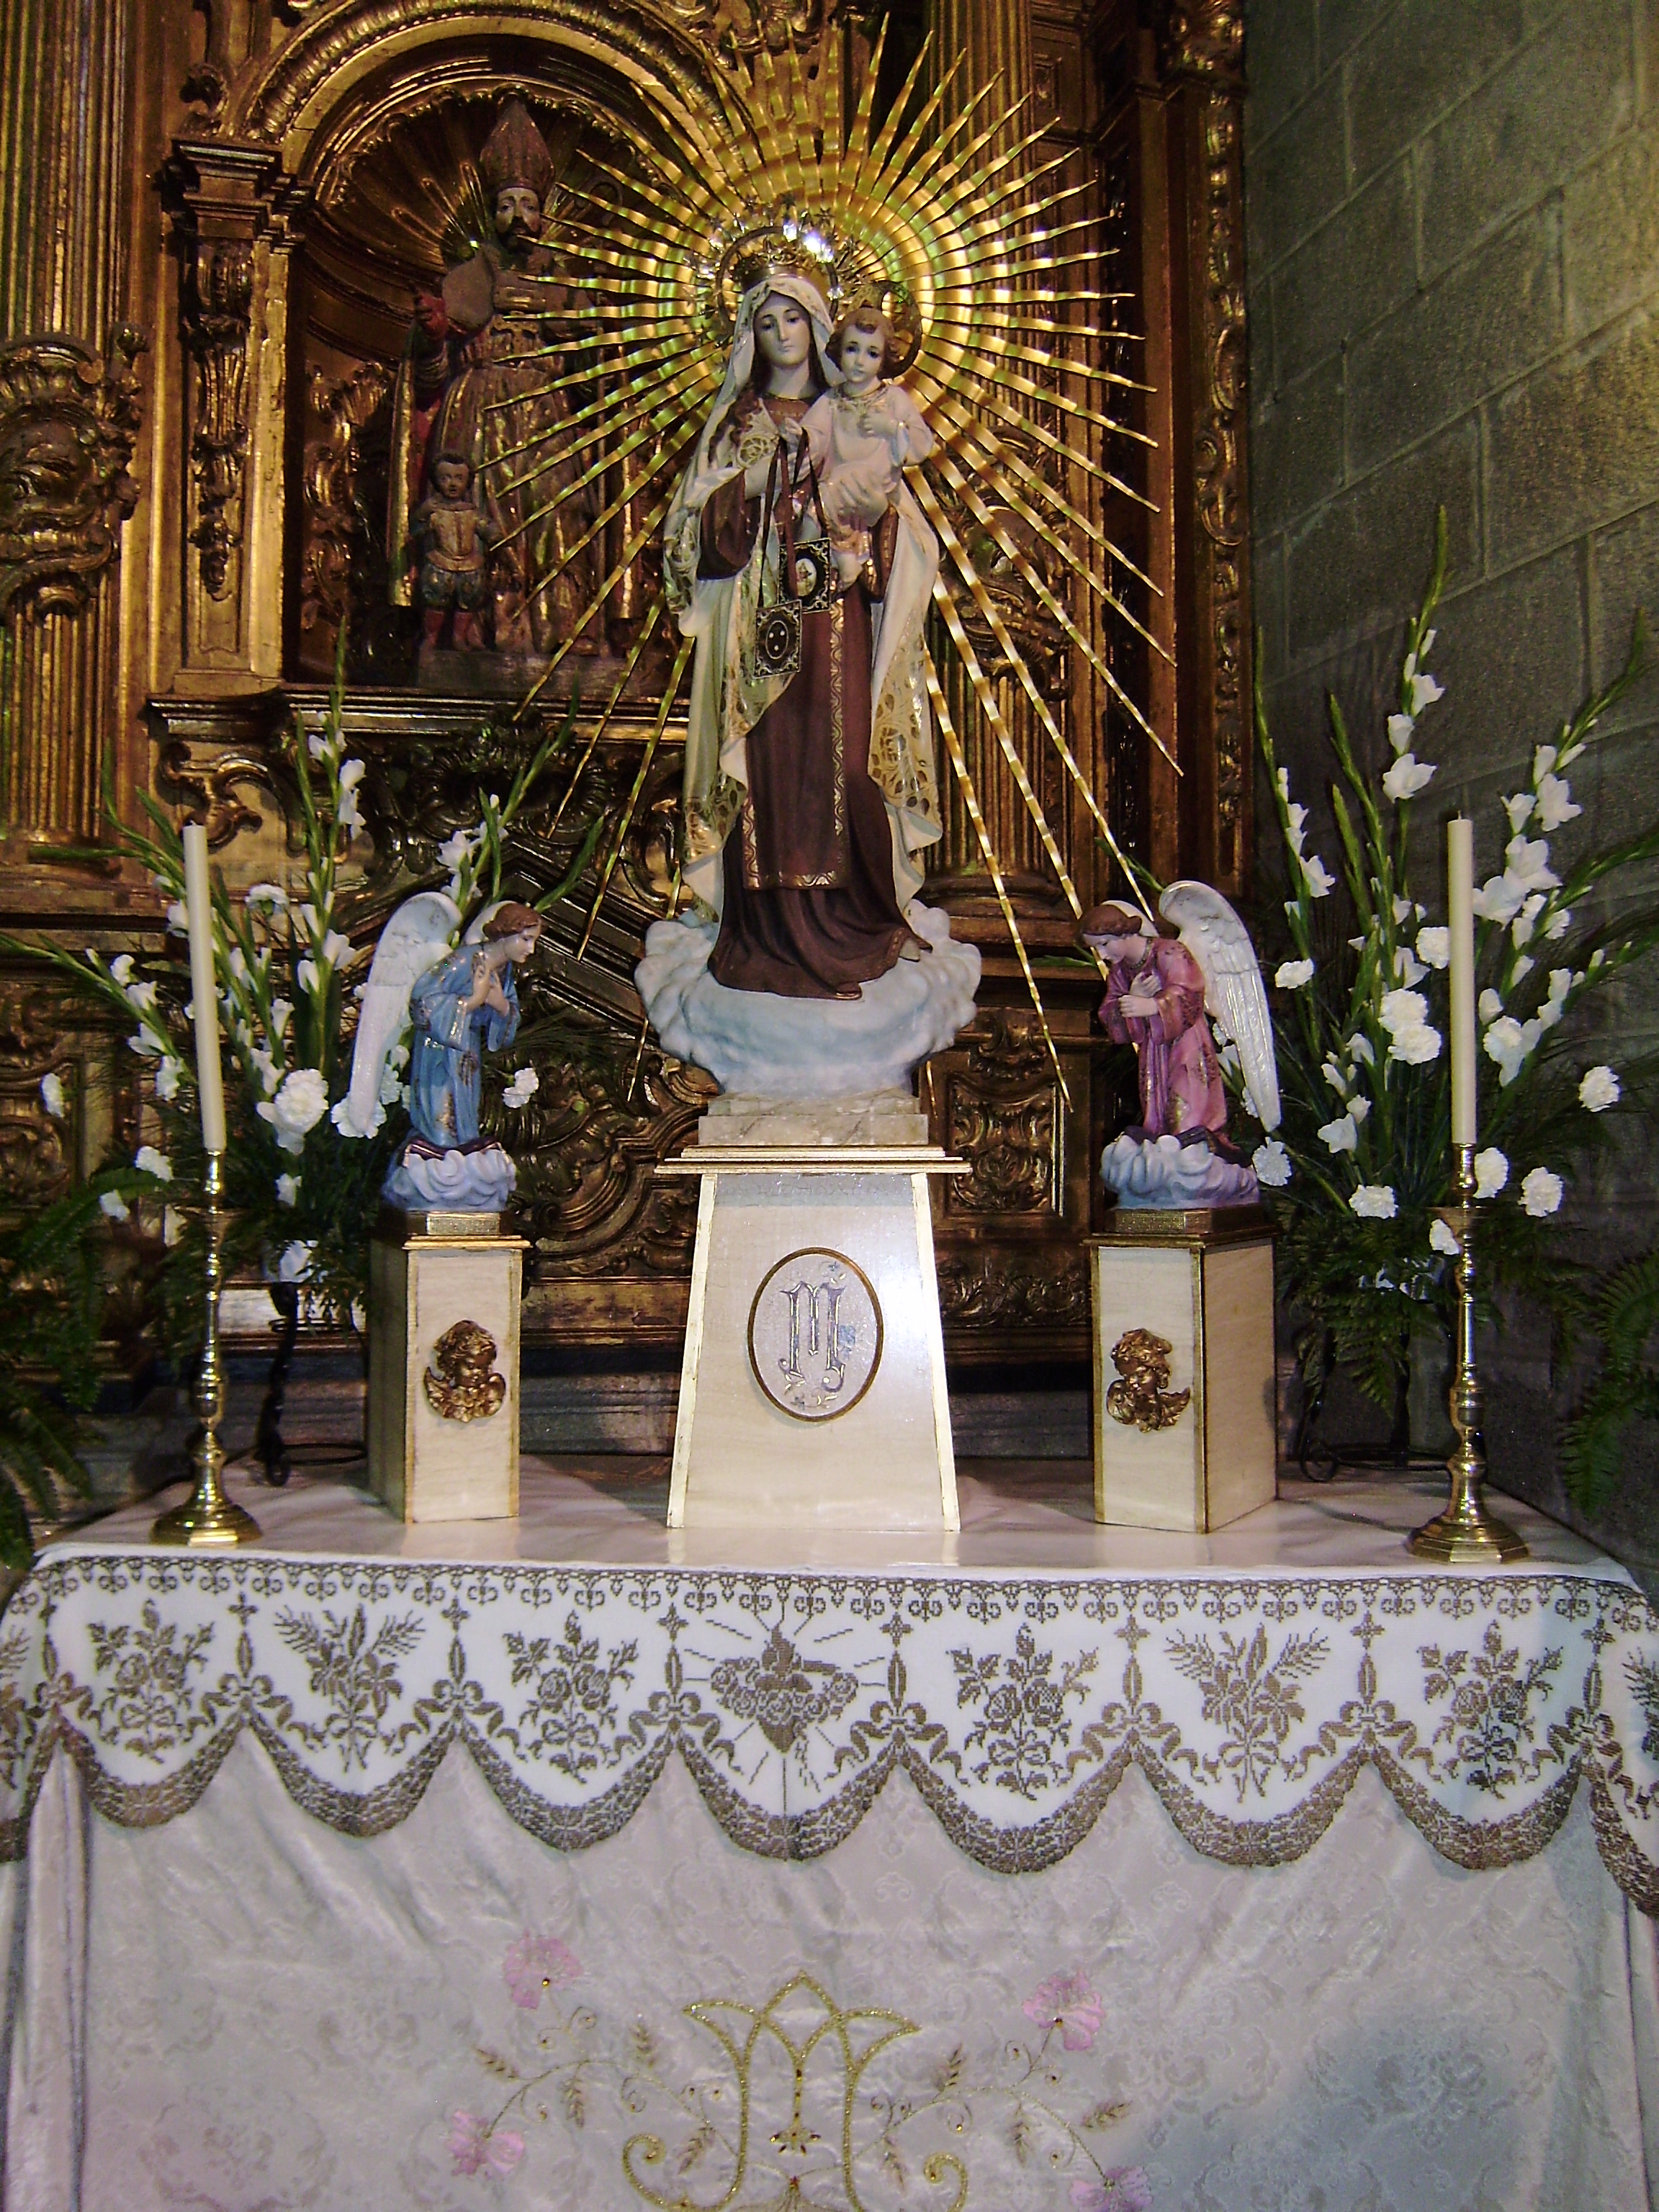 La comunidad parroquial celebra la fiesta de la Virgen del Carmen